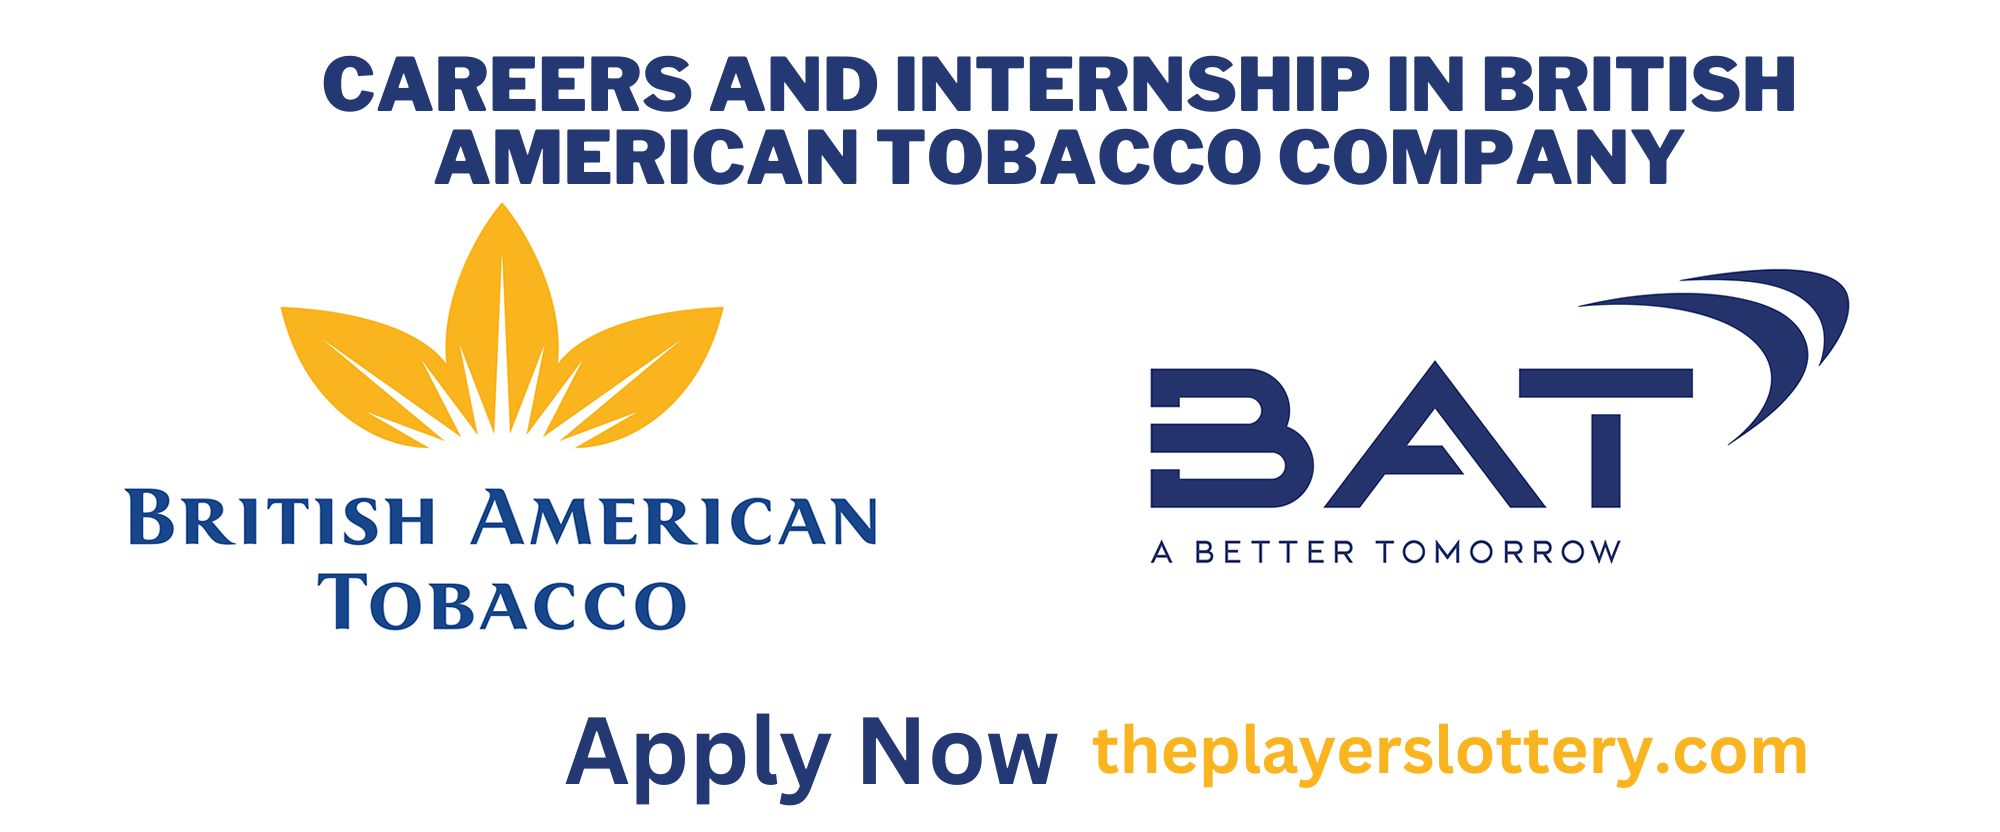 Careers and Internship in British American Tobacco Company